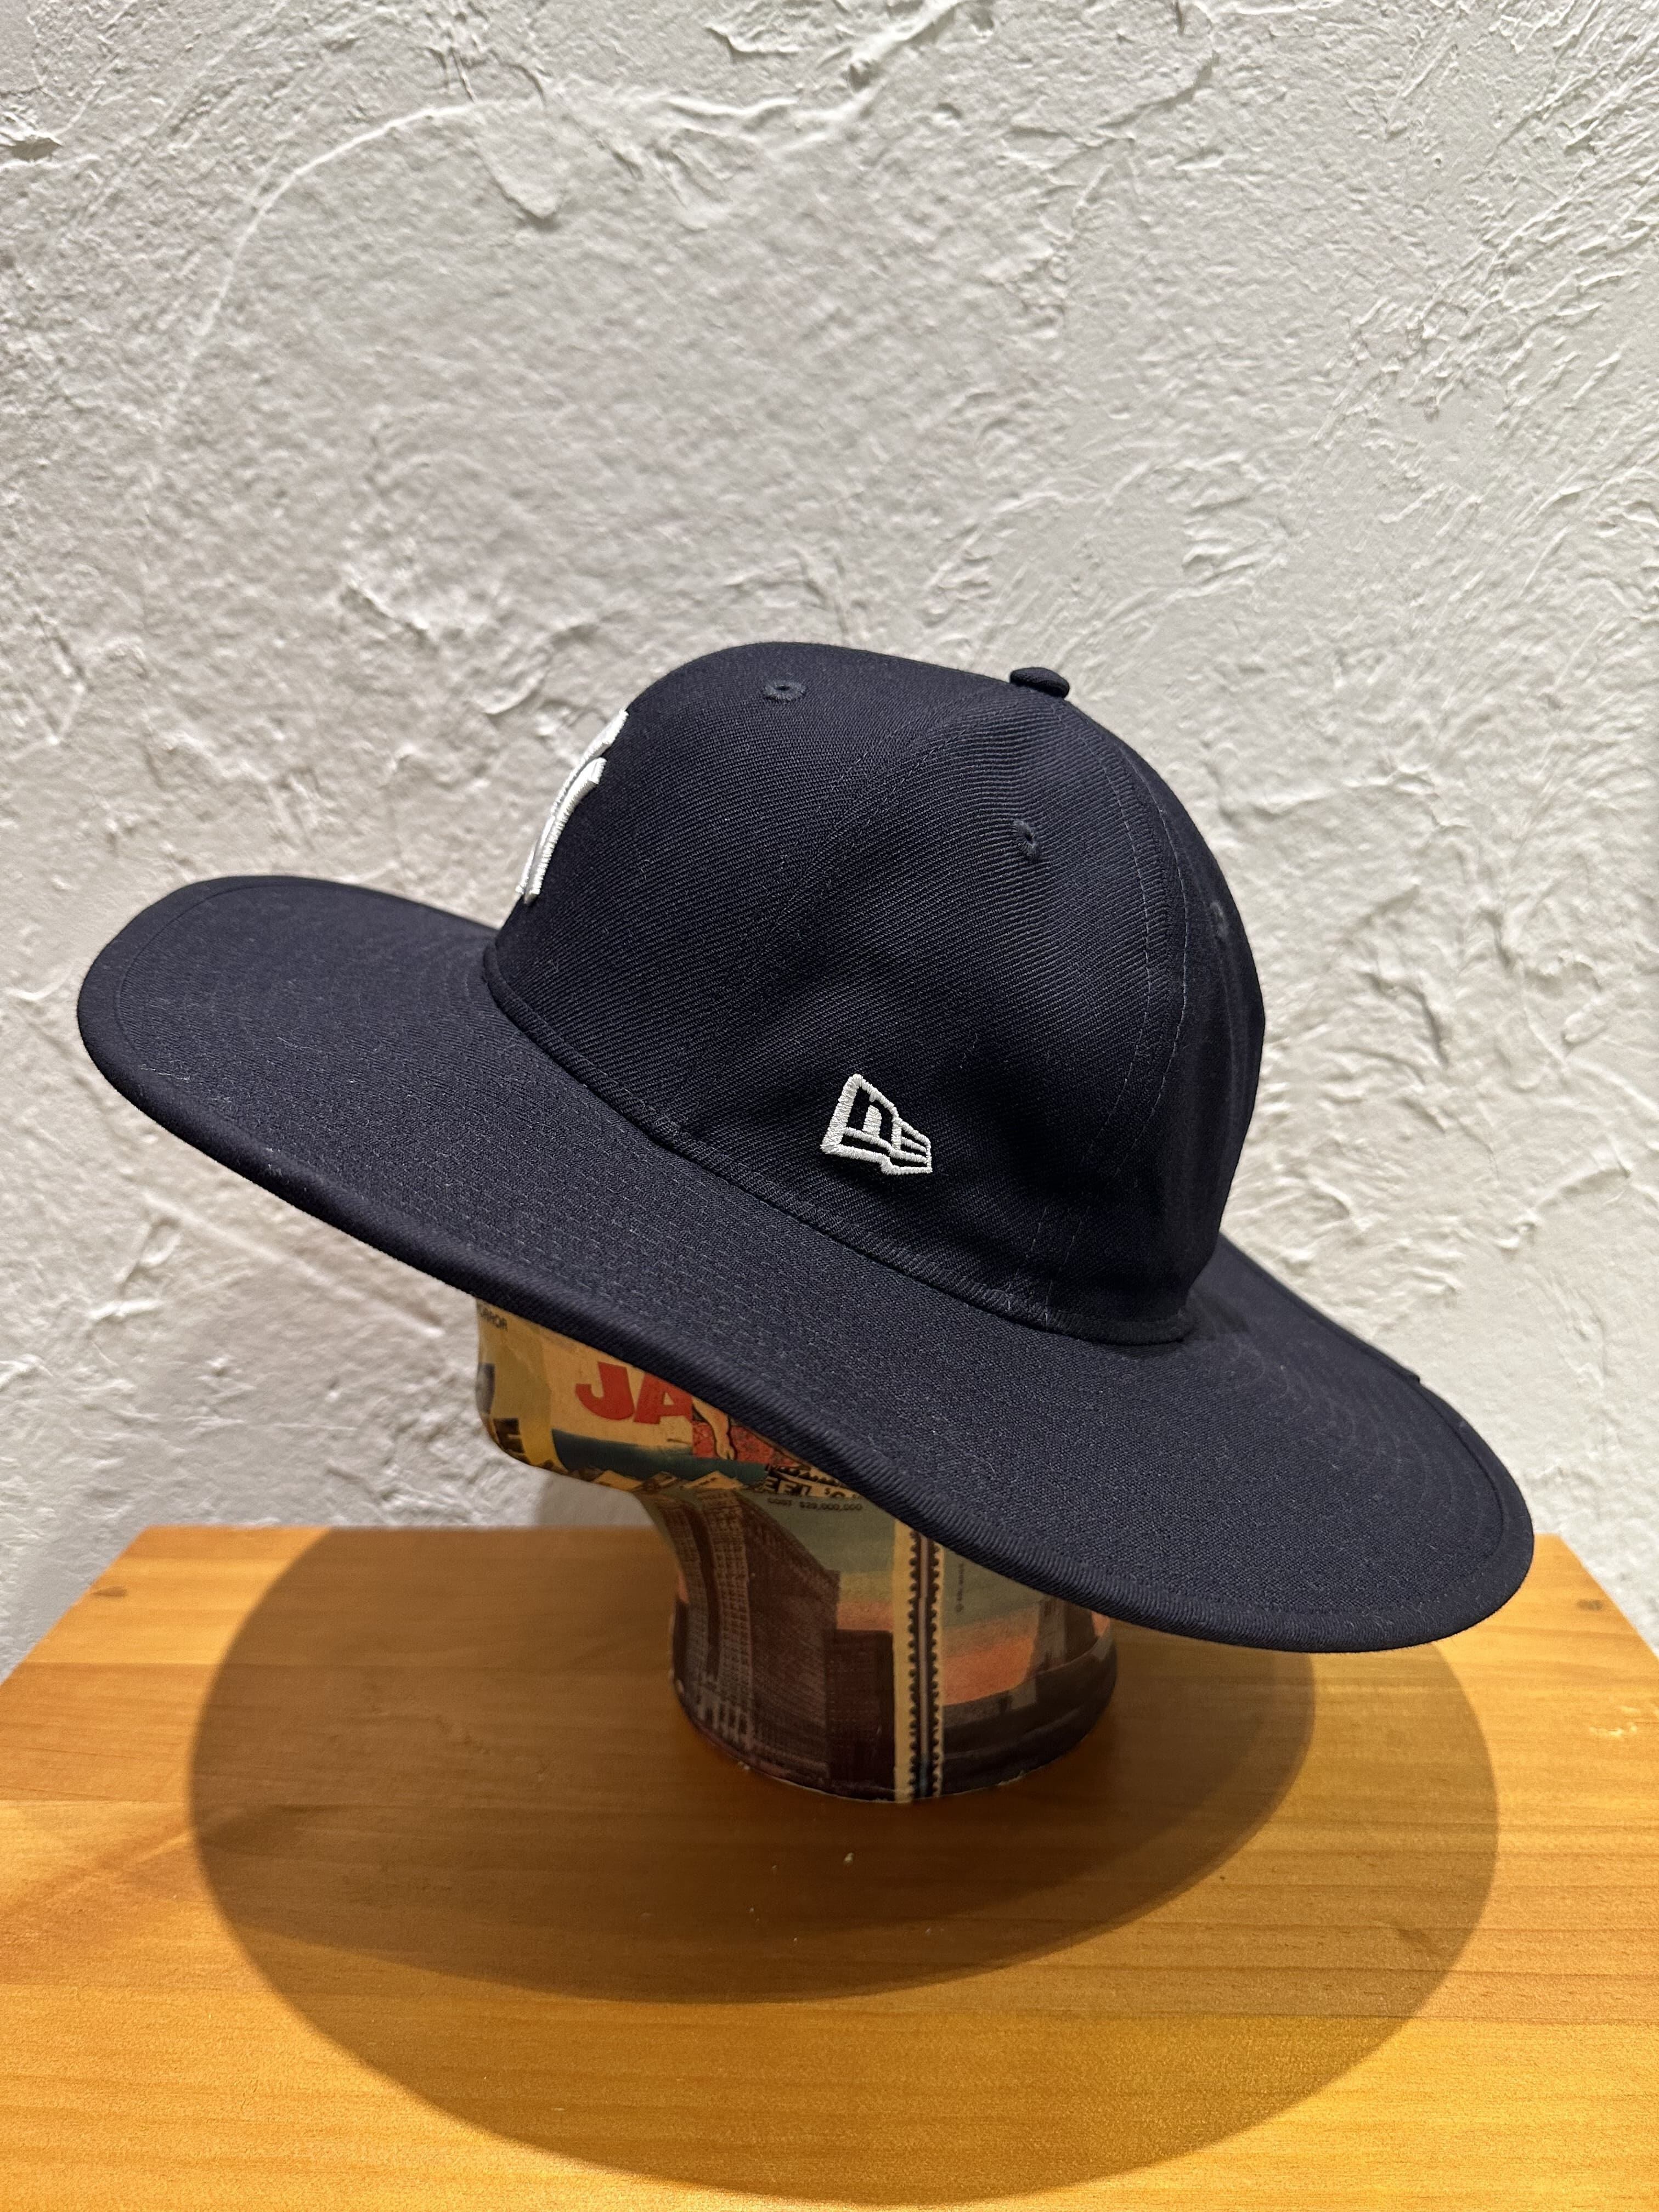 NEW ERA (ﾆｭｰｴﾗ) - FITTED LONG BRIM HAT NYY (ﾌｨｯﾃﾄﾞﾛﾝｸﾞﾌﾞﾘﾑ ﾊｯﾄ  ﾆｭｰﾖｰｸ･ﾔﾝｷｰｽ) | thecompus powered by BASE